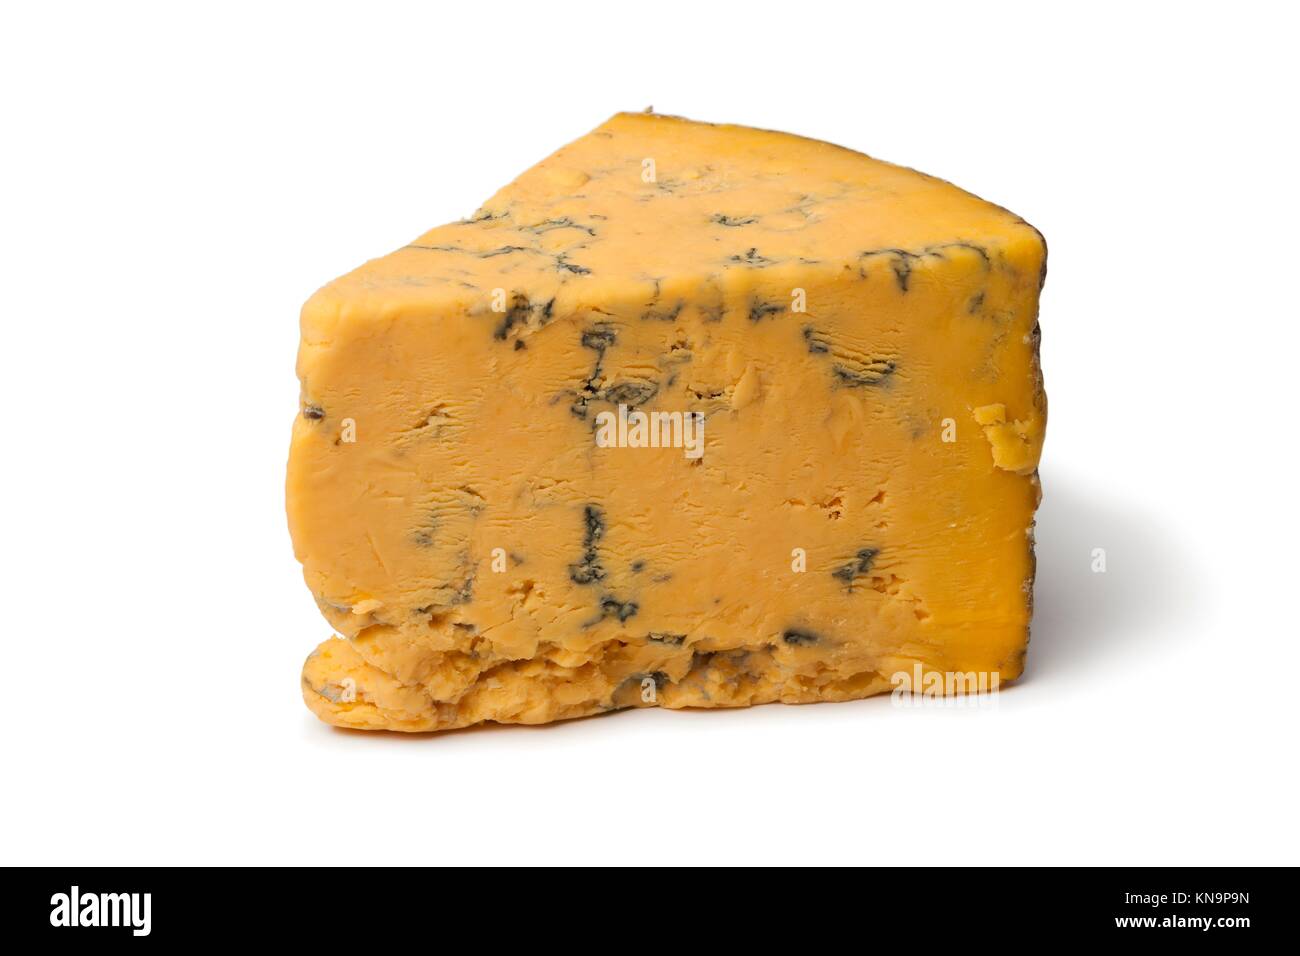 Wedge of English Shropshire Blue cheese on white background. Stock Photo